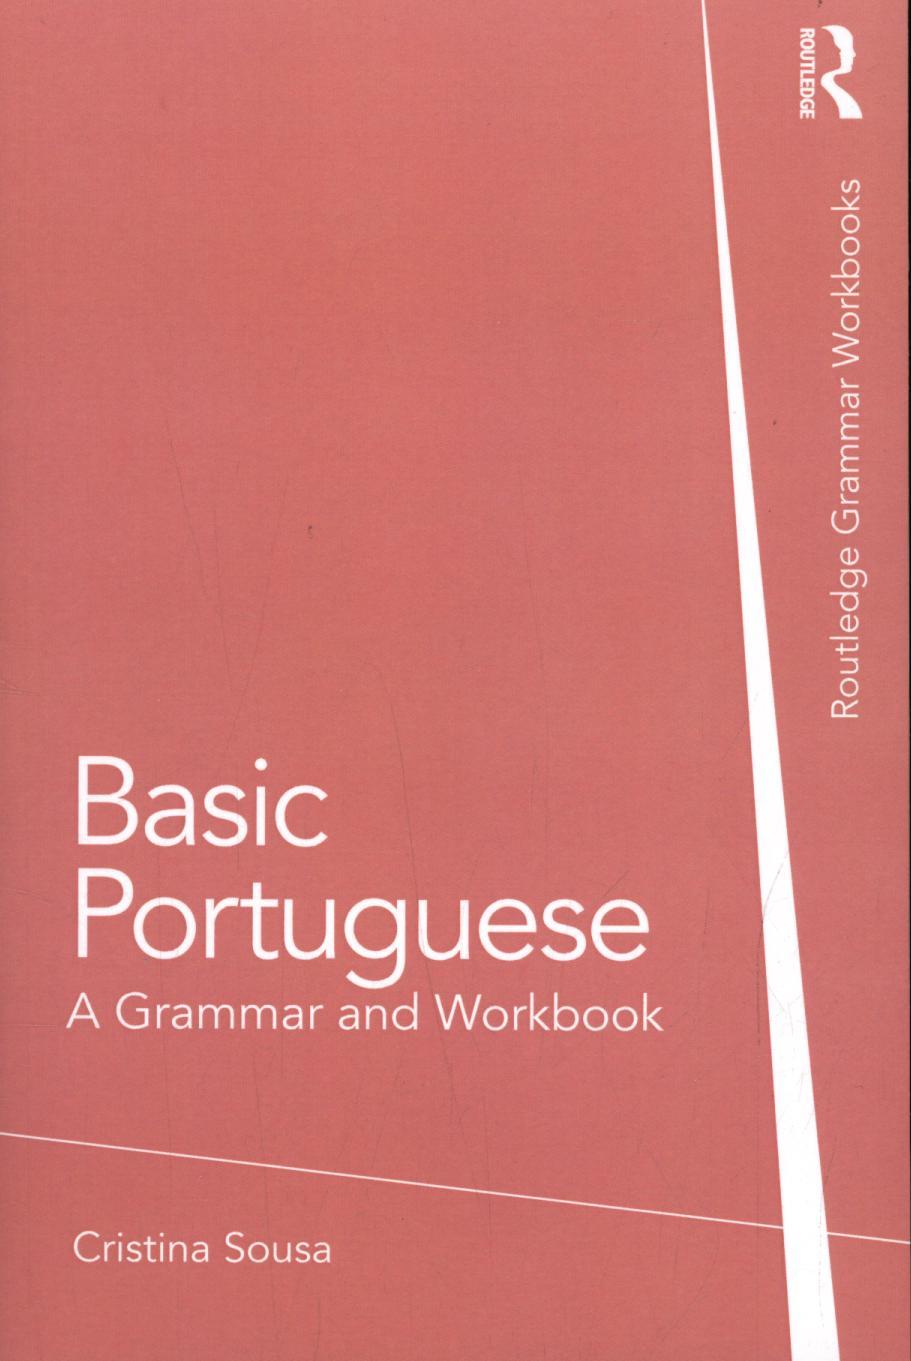 Basic Portuguese - Cristina Sousa